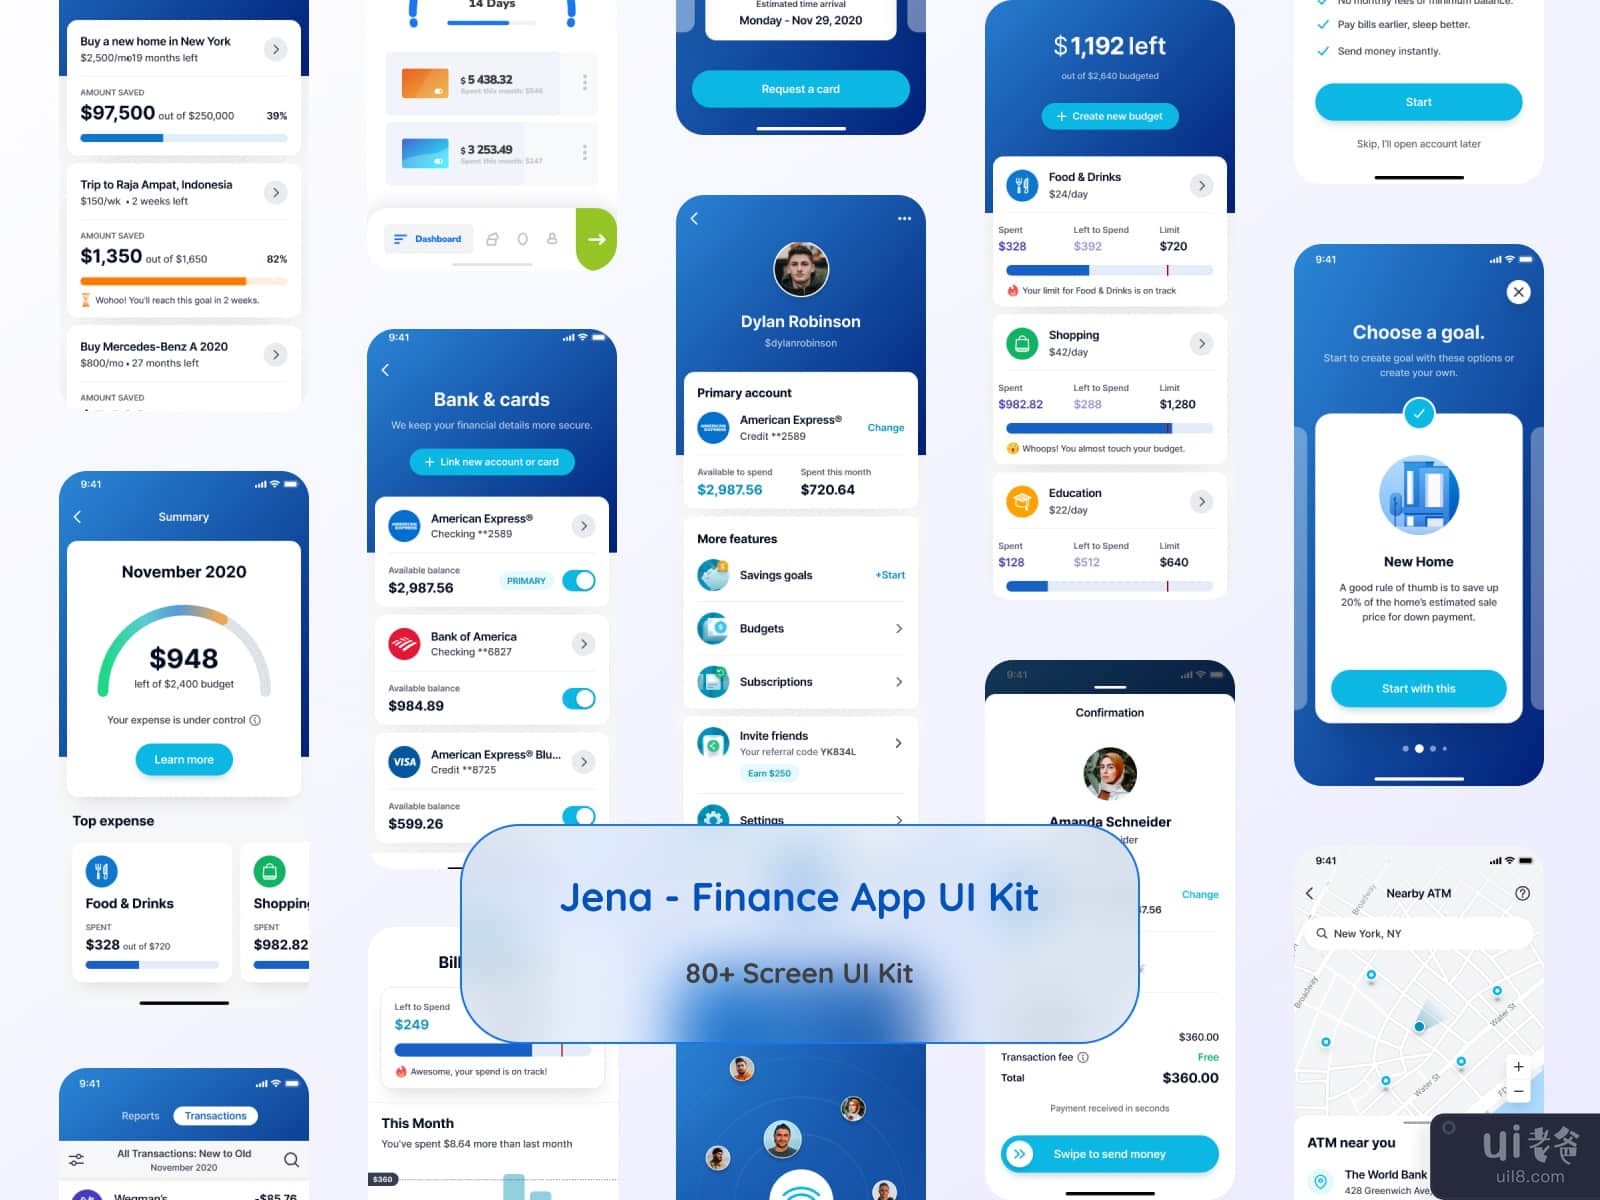 Jena - Finance App UI Kit